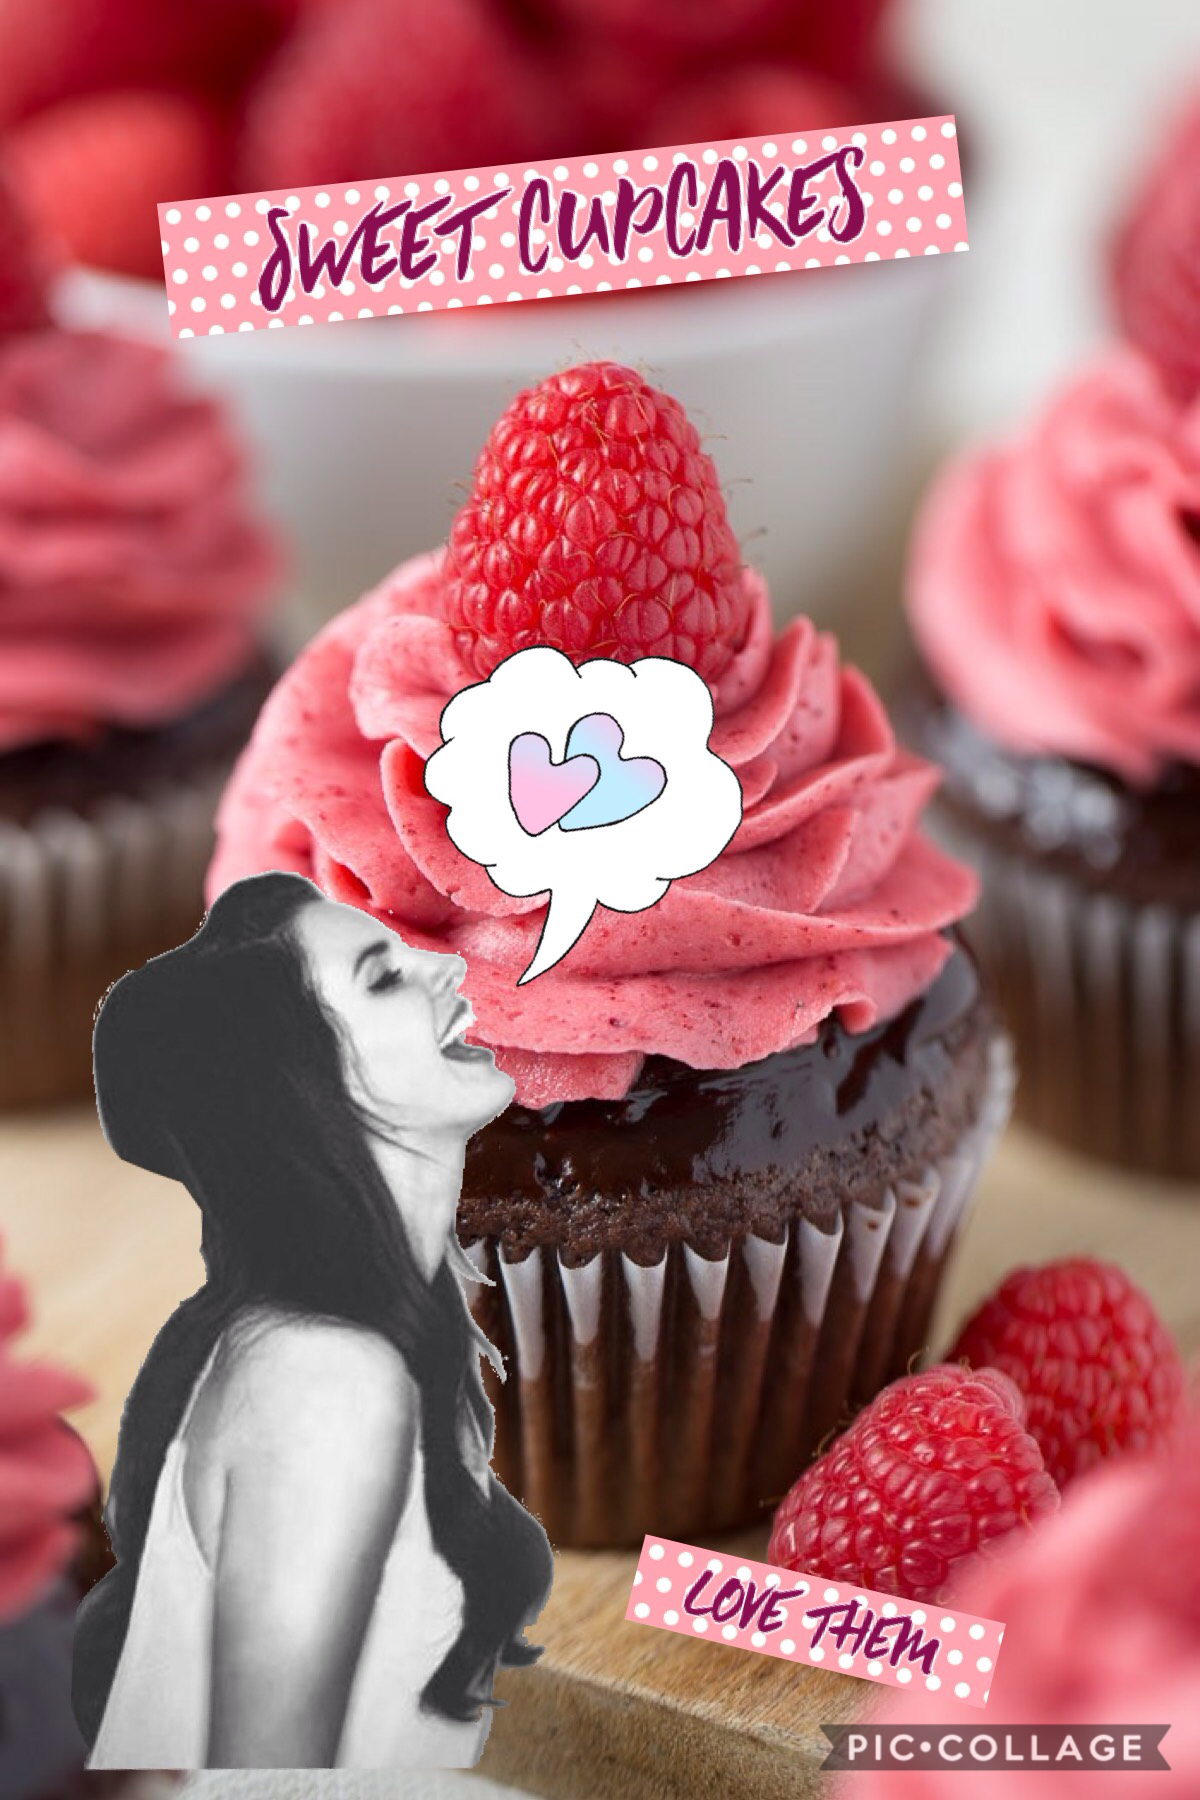 Cupcakes # love them # 💕